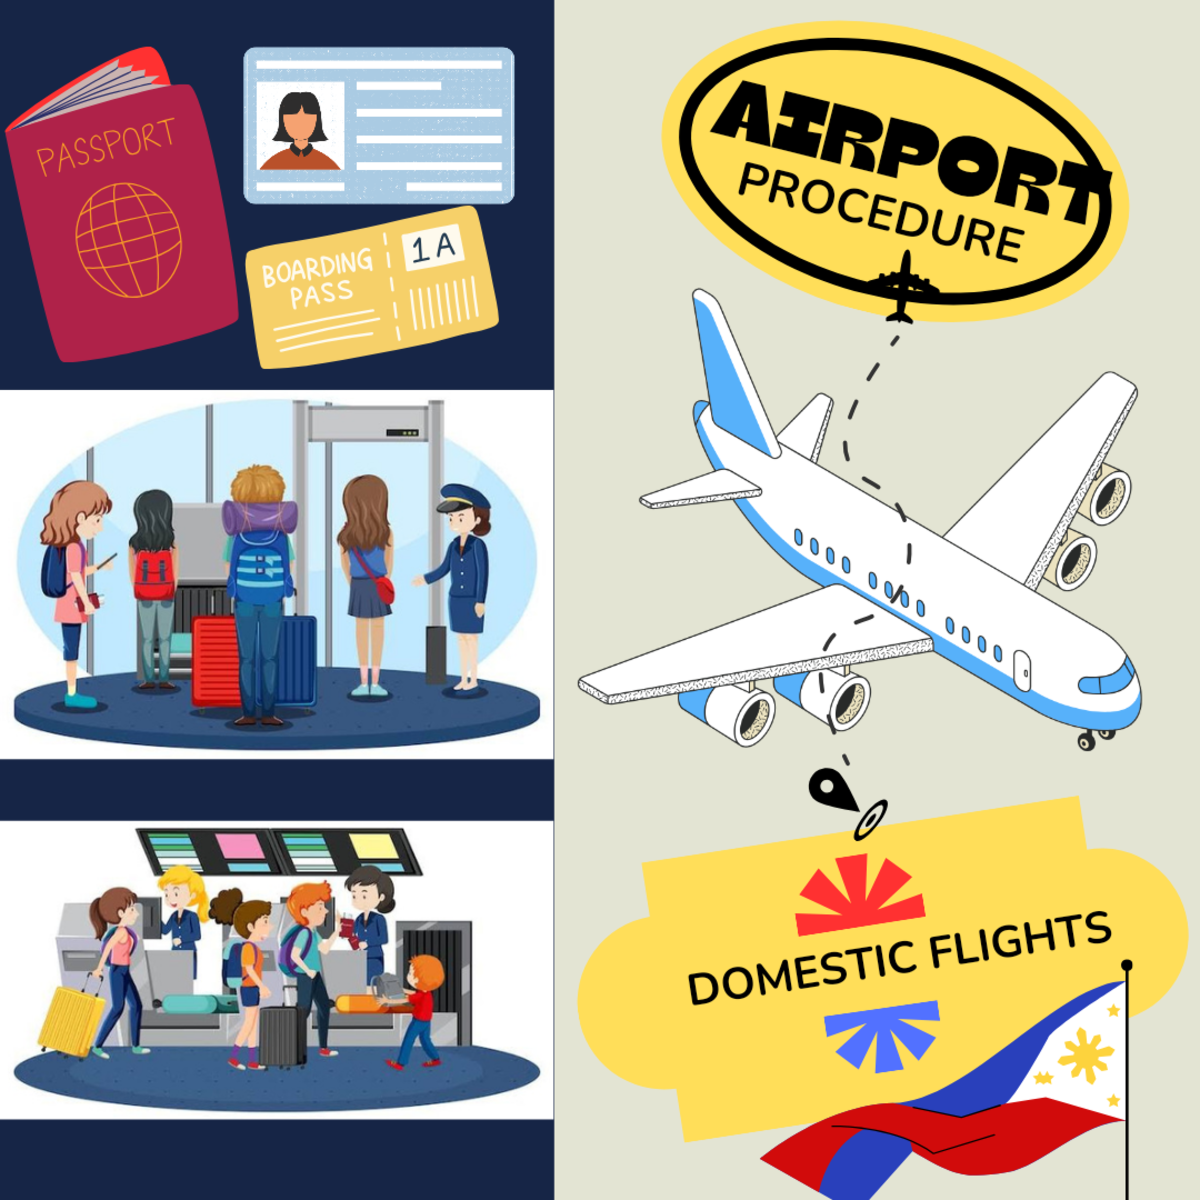 Domestic Flights: Airport Procedure in the Philippines